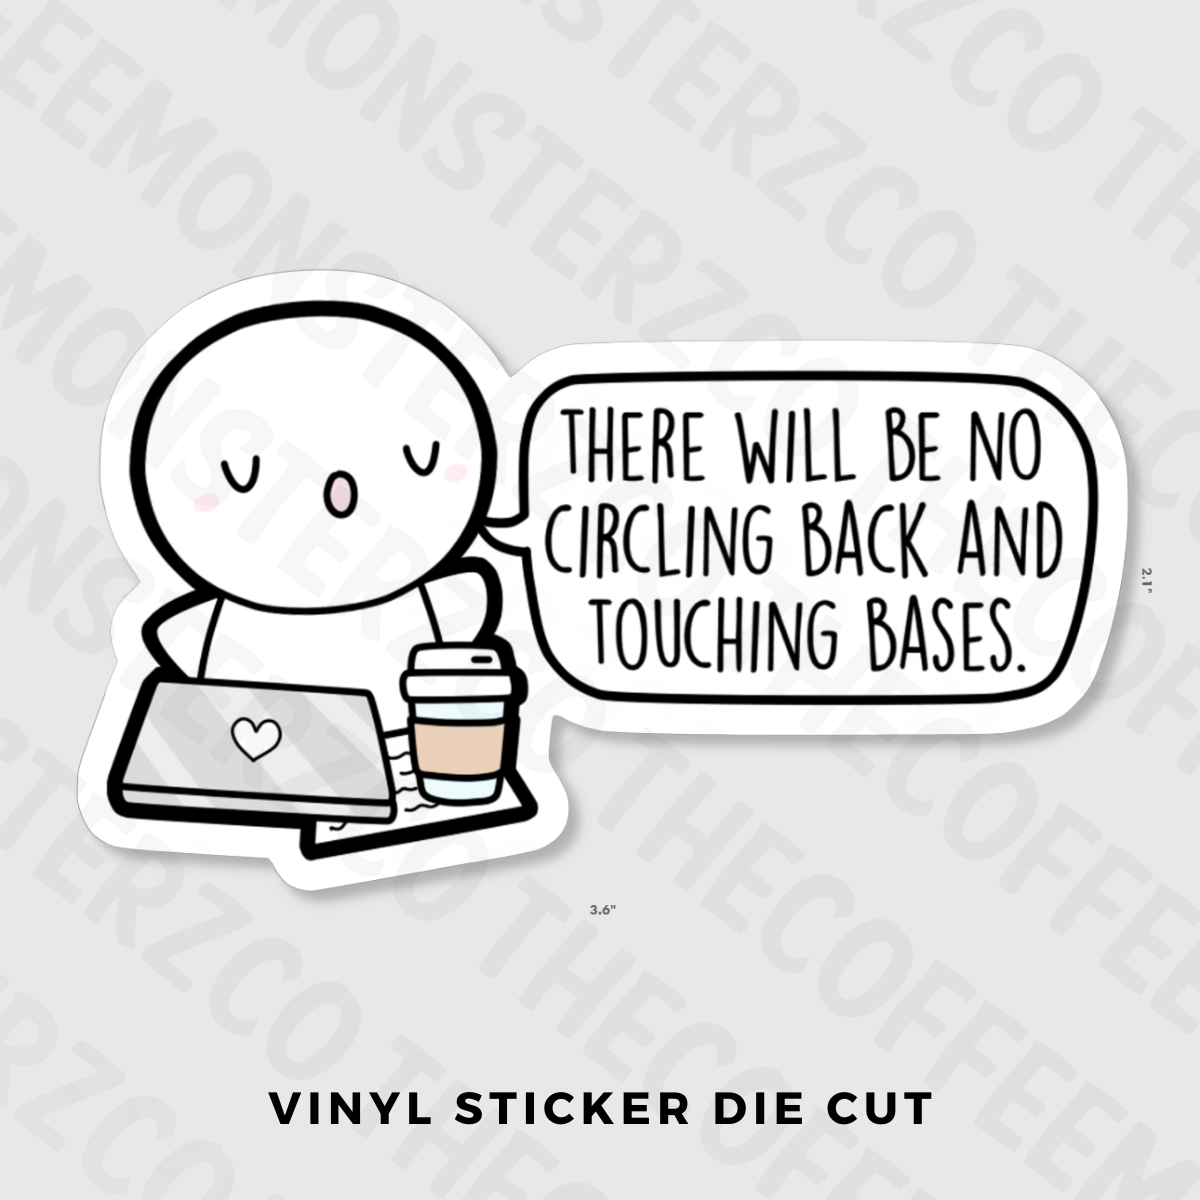 Corporate Vinyl Stickers